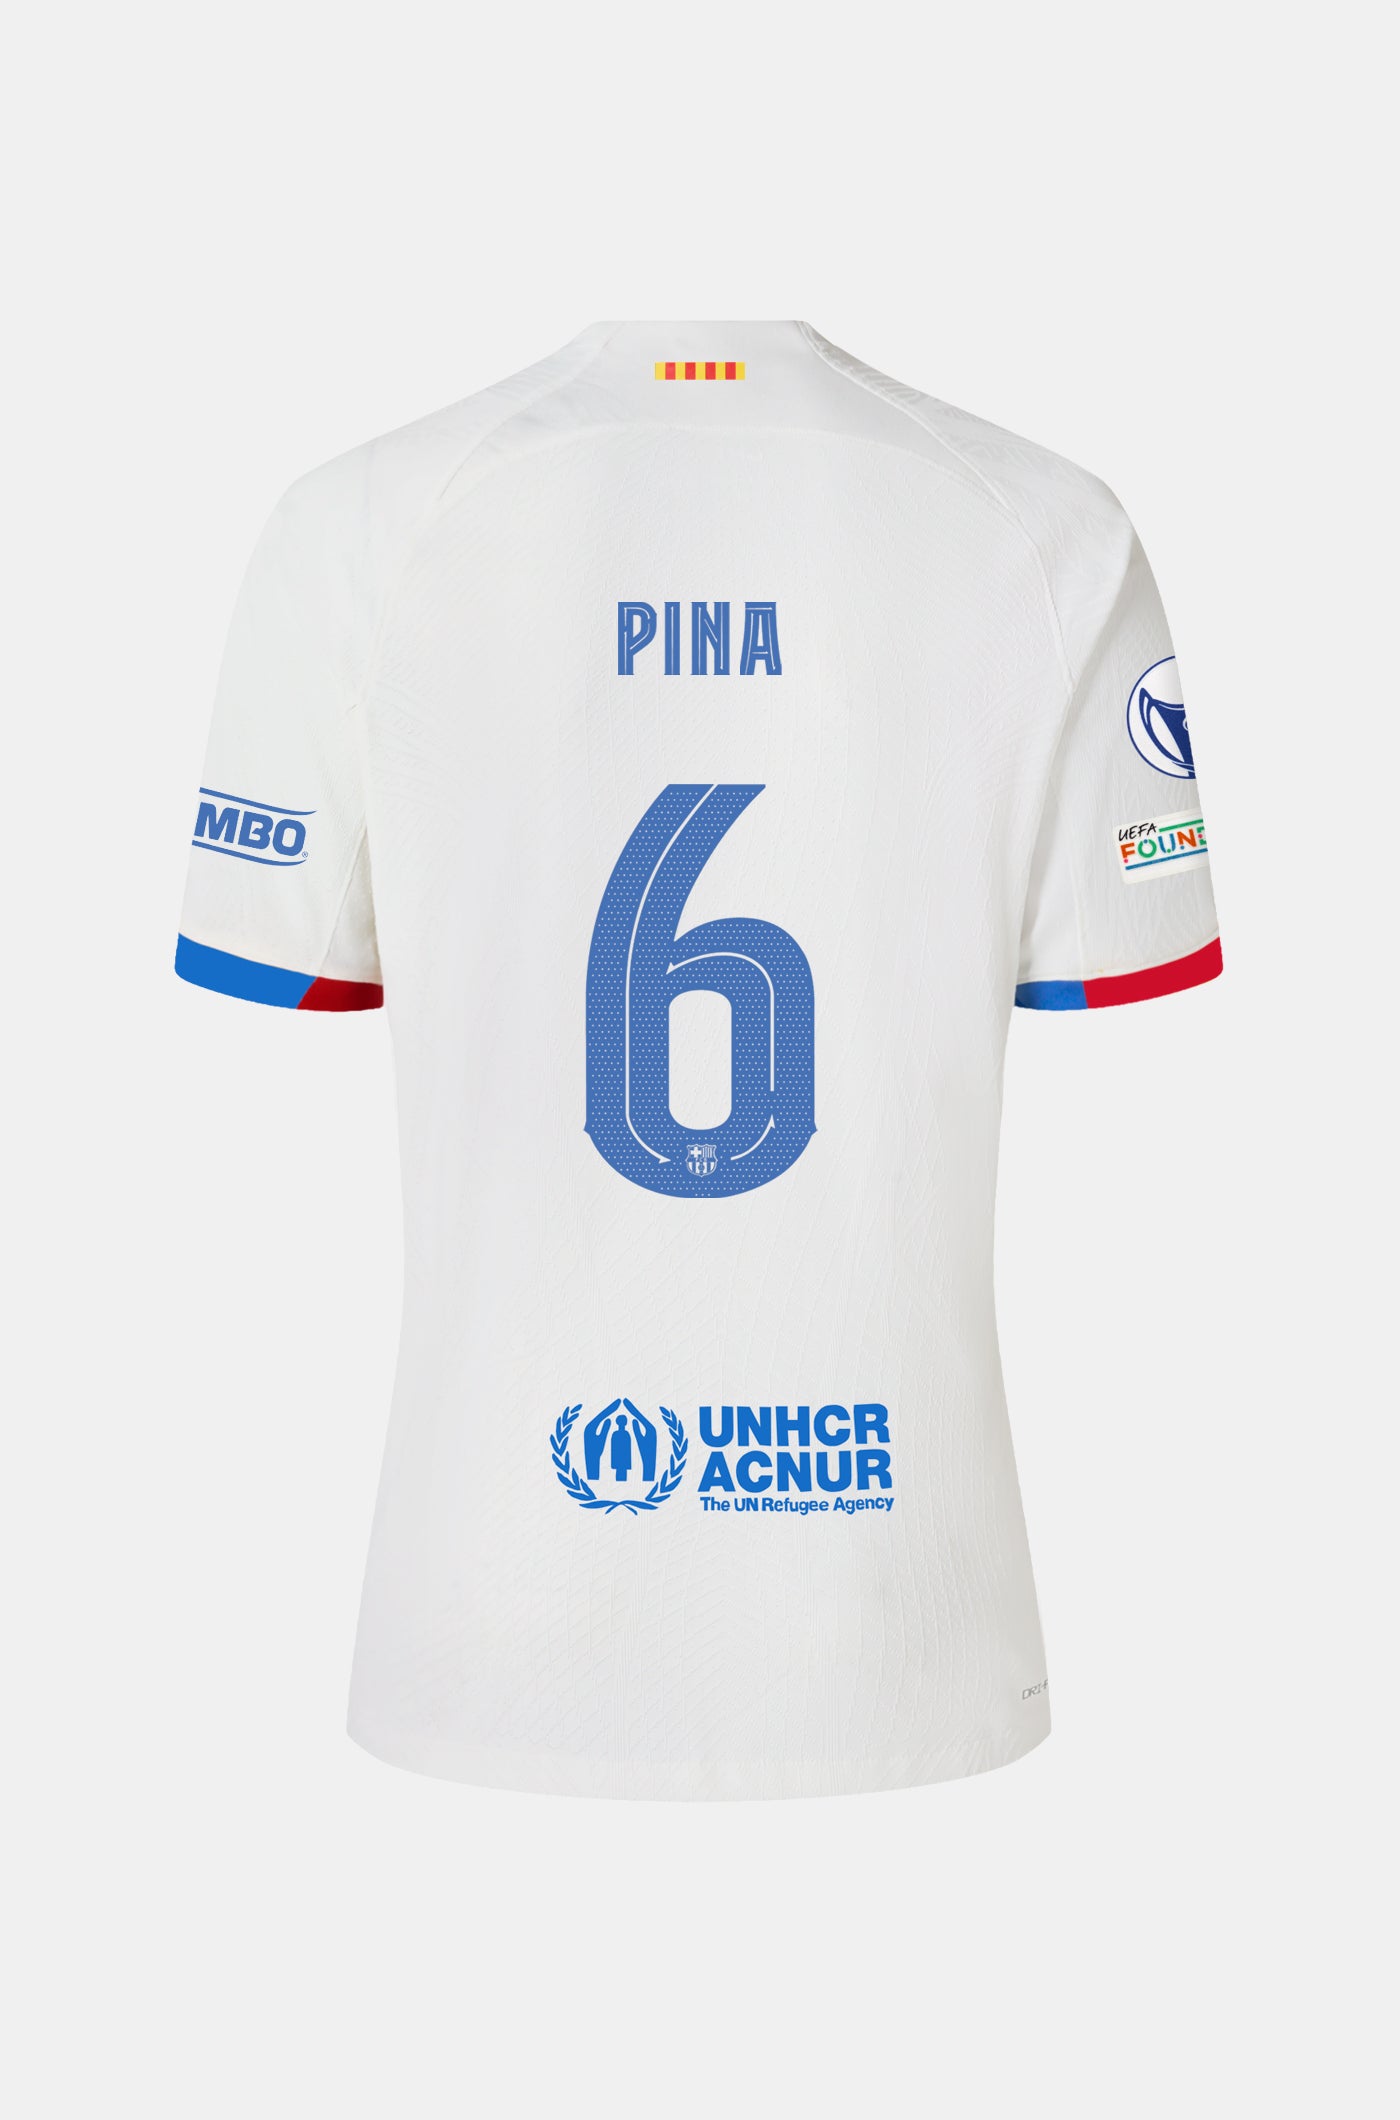 UWCL FC Barcelona away shirt 23/24 Player's Edition - PINA